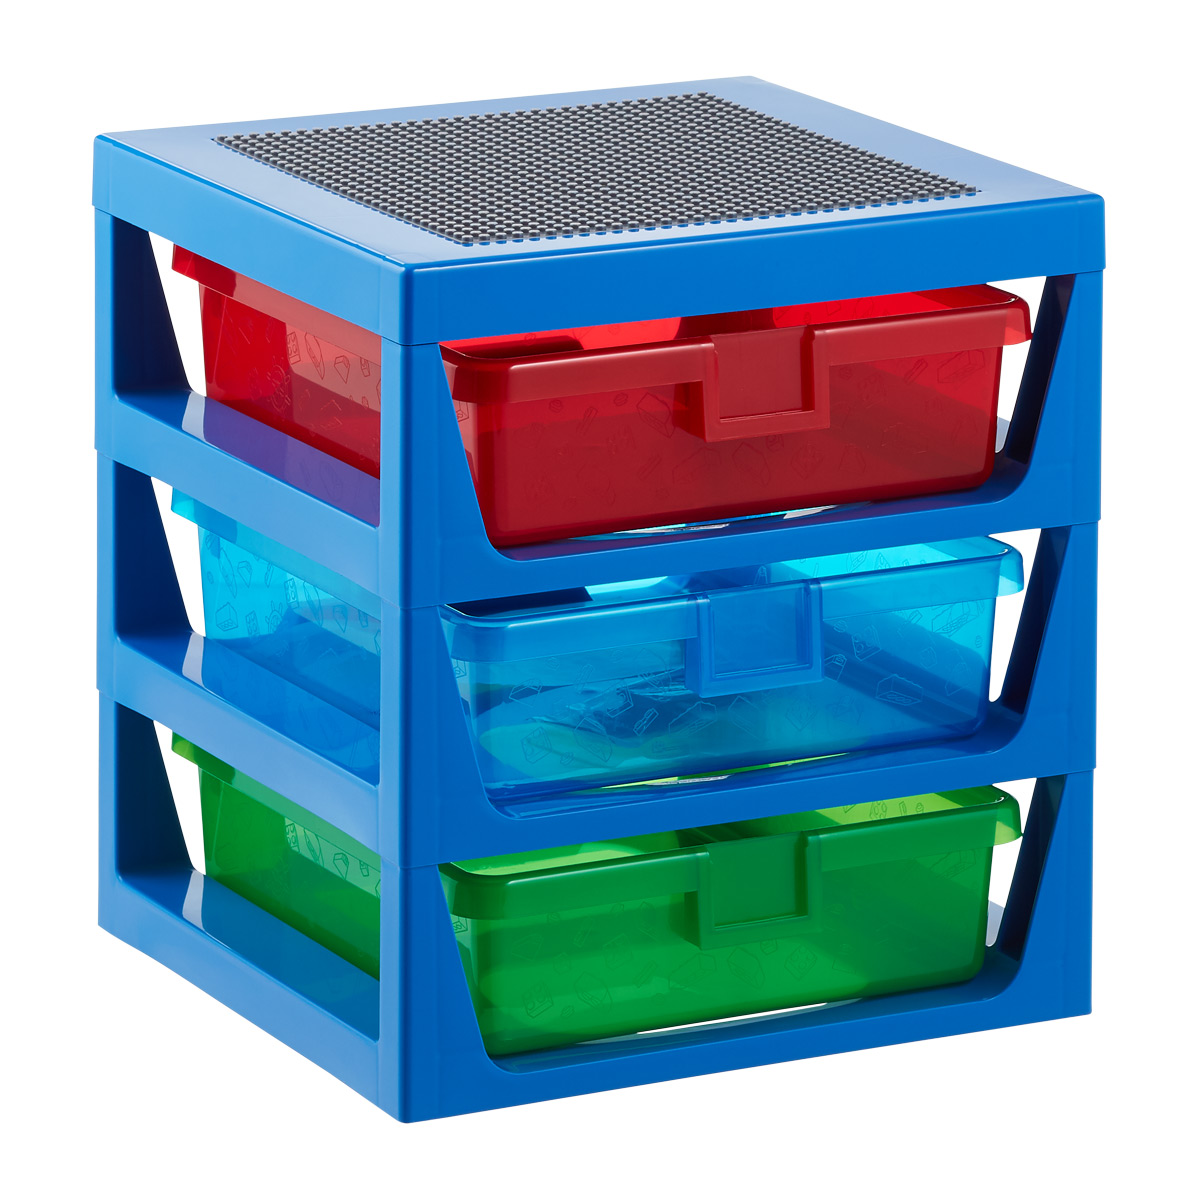 Lego 3-Drawer Storage Rack System, in Blue